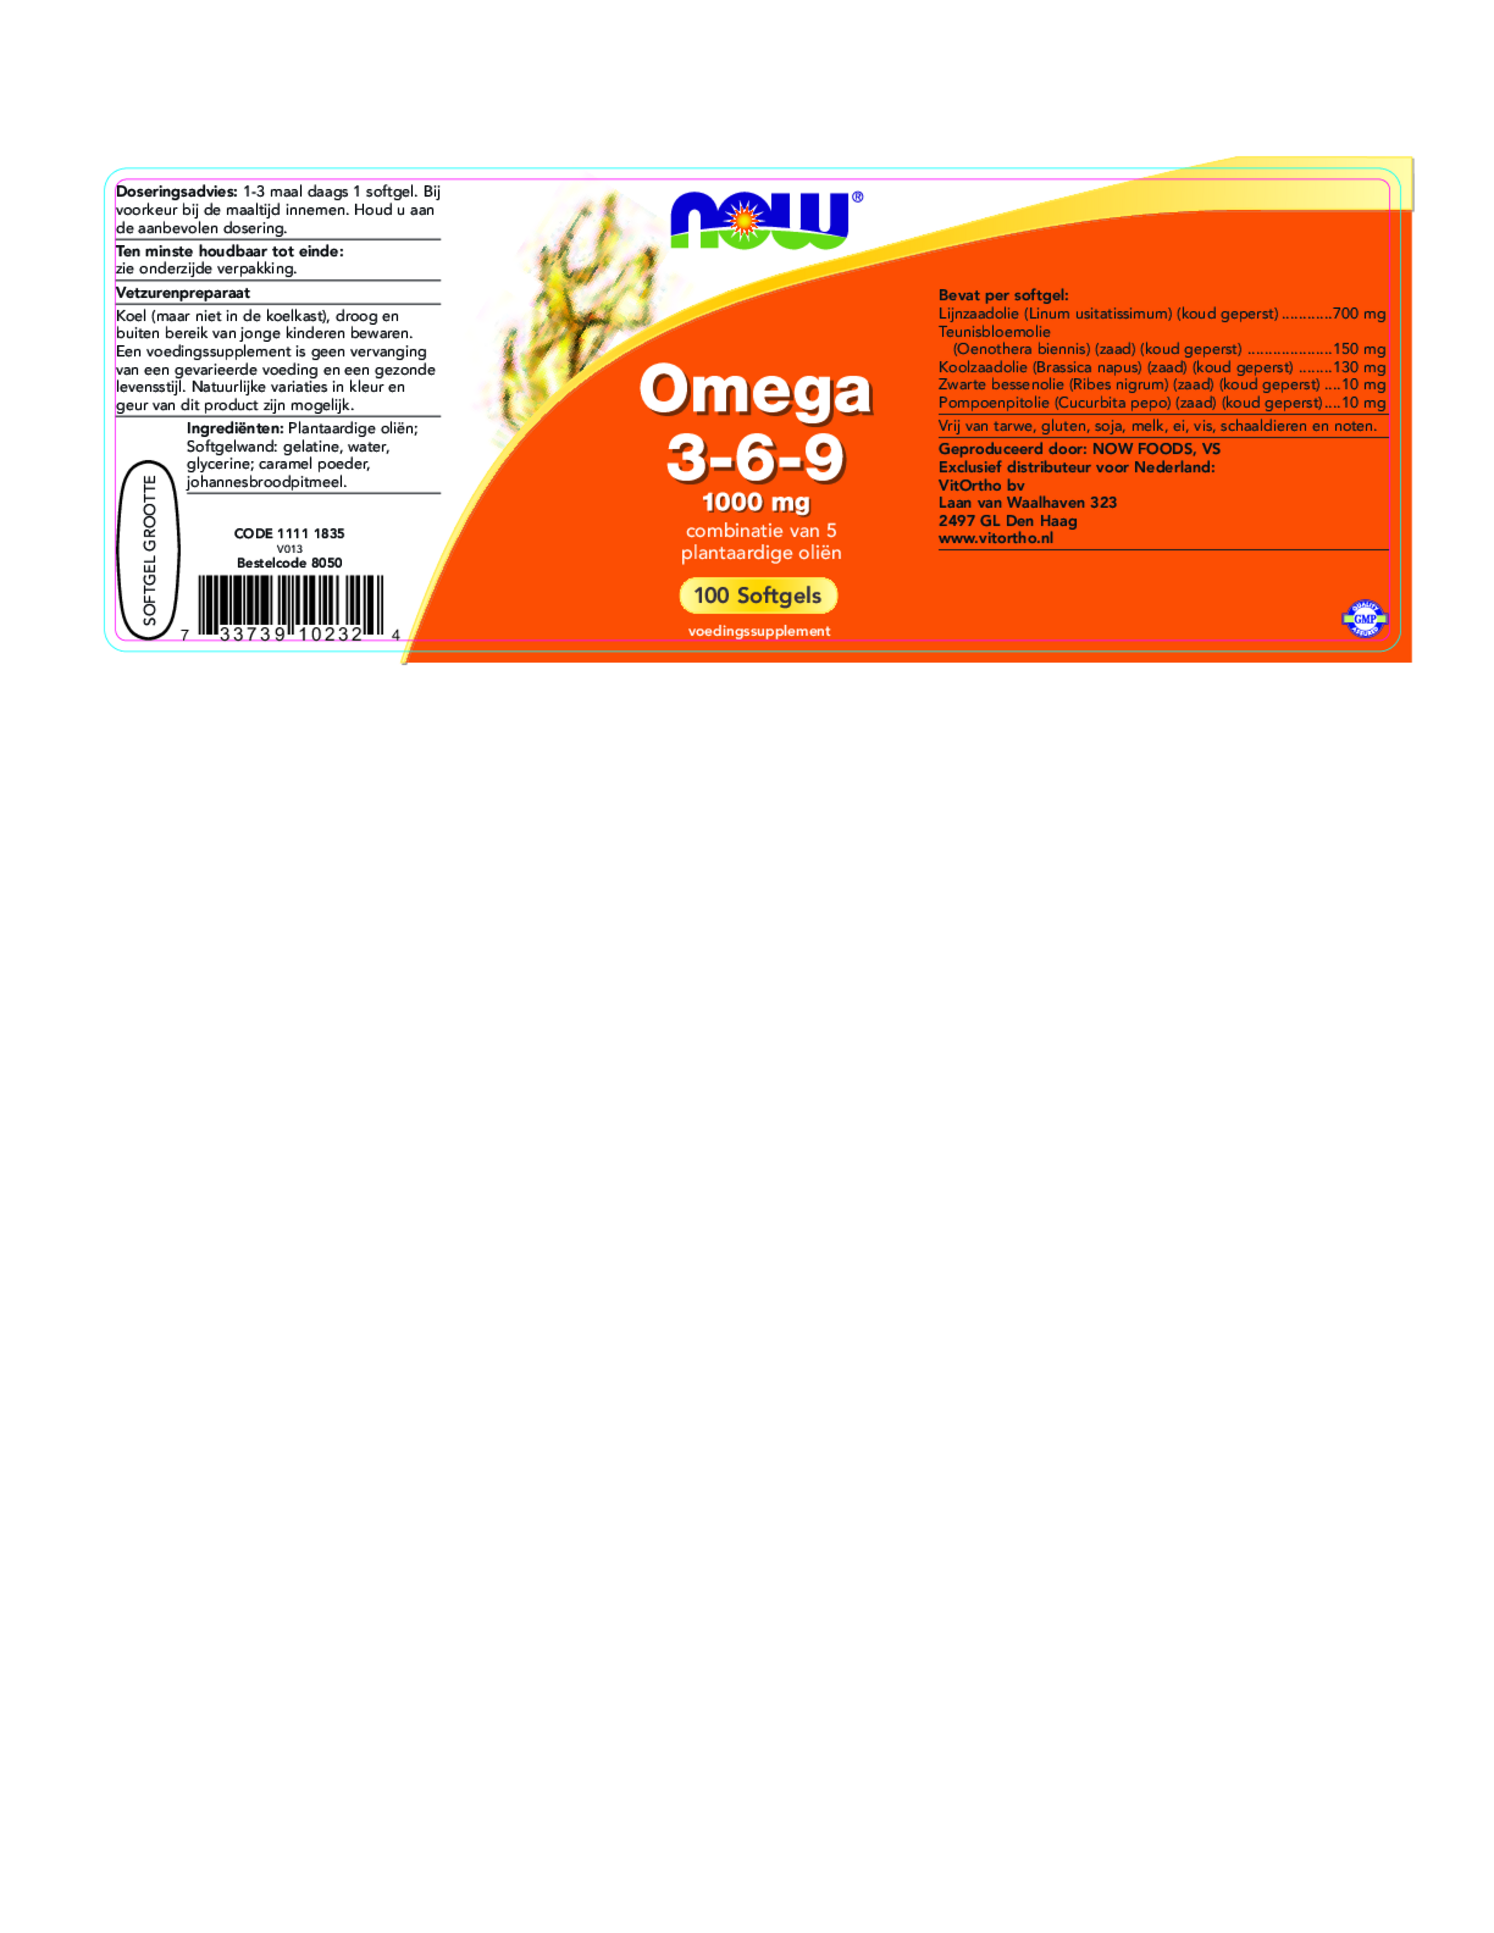 Omega 3-6-9 1000mg Tabletten afbeelding van document #1, etiket